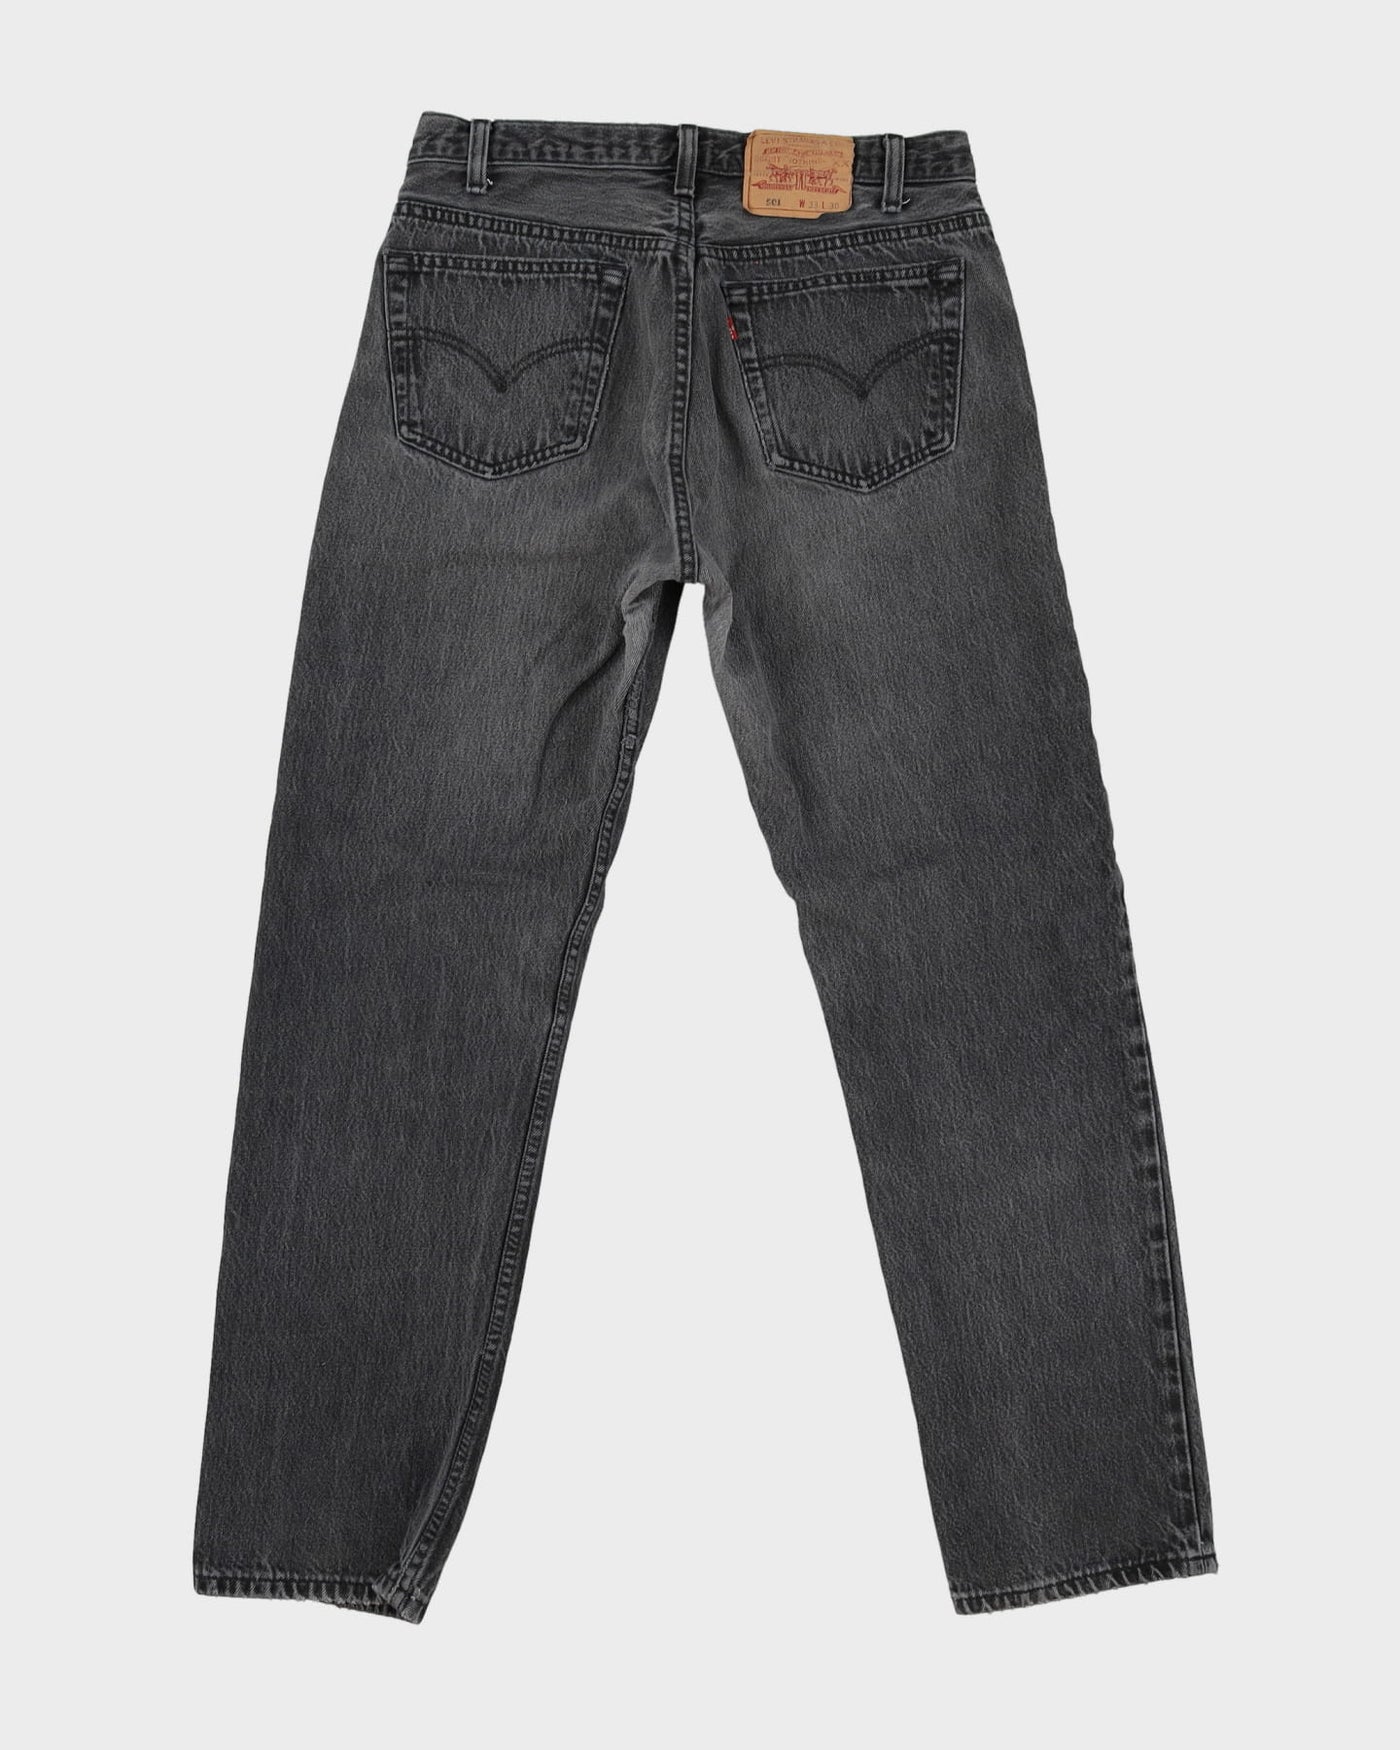 Vintage 90s Levi's 501 Dark Wash Jeans - W32 L30